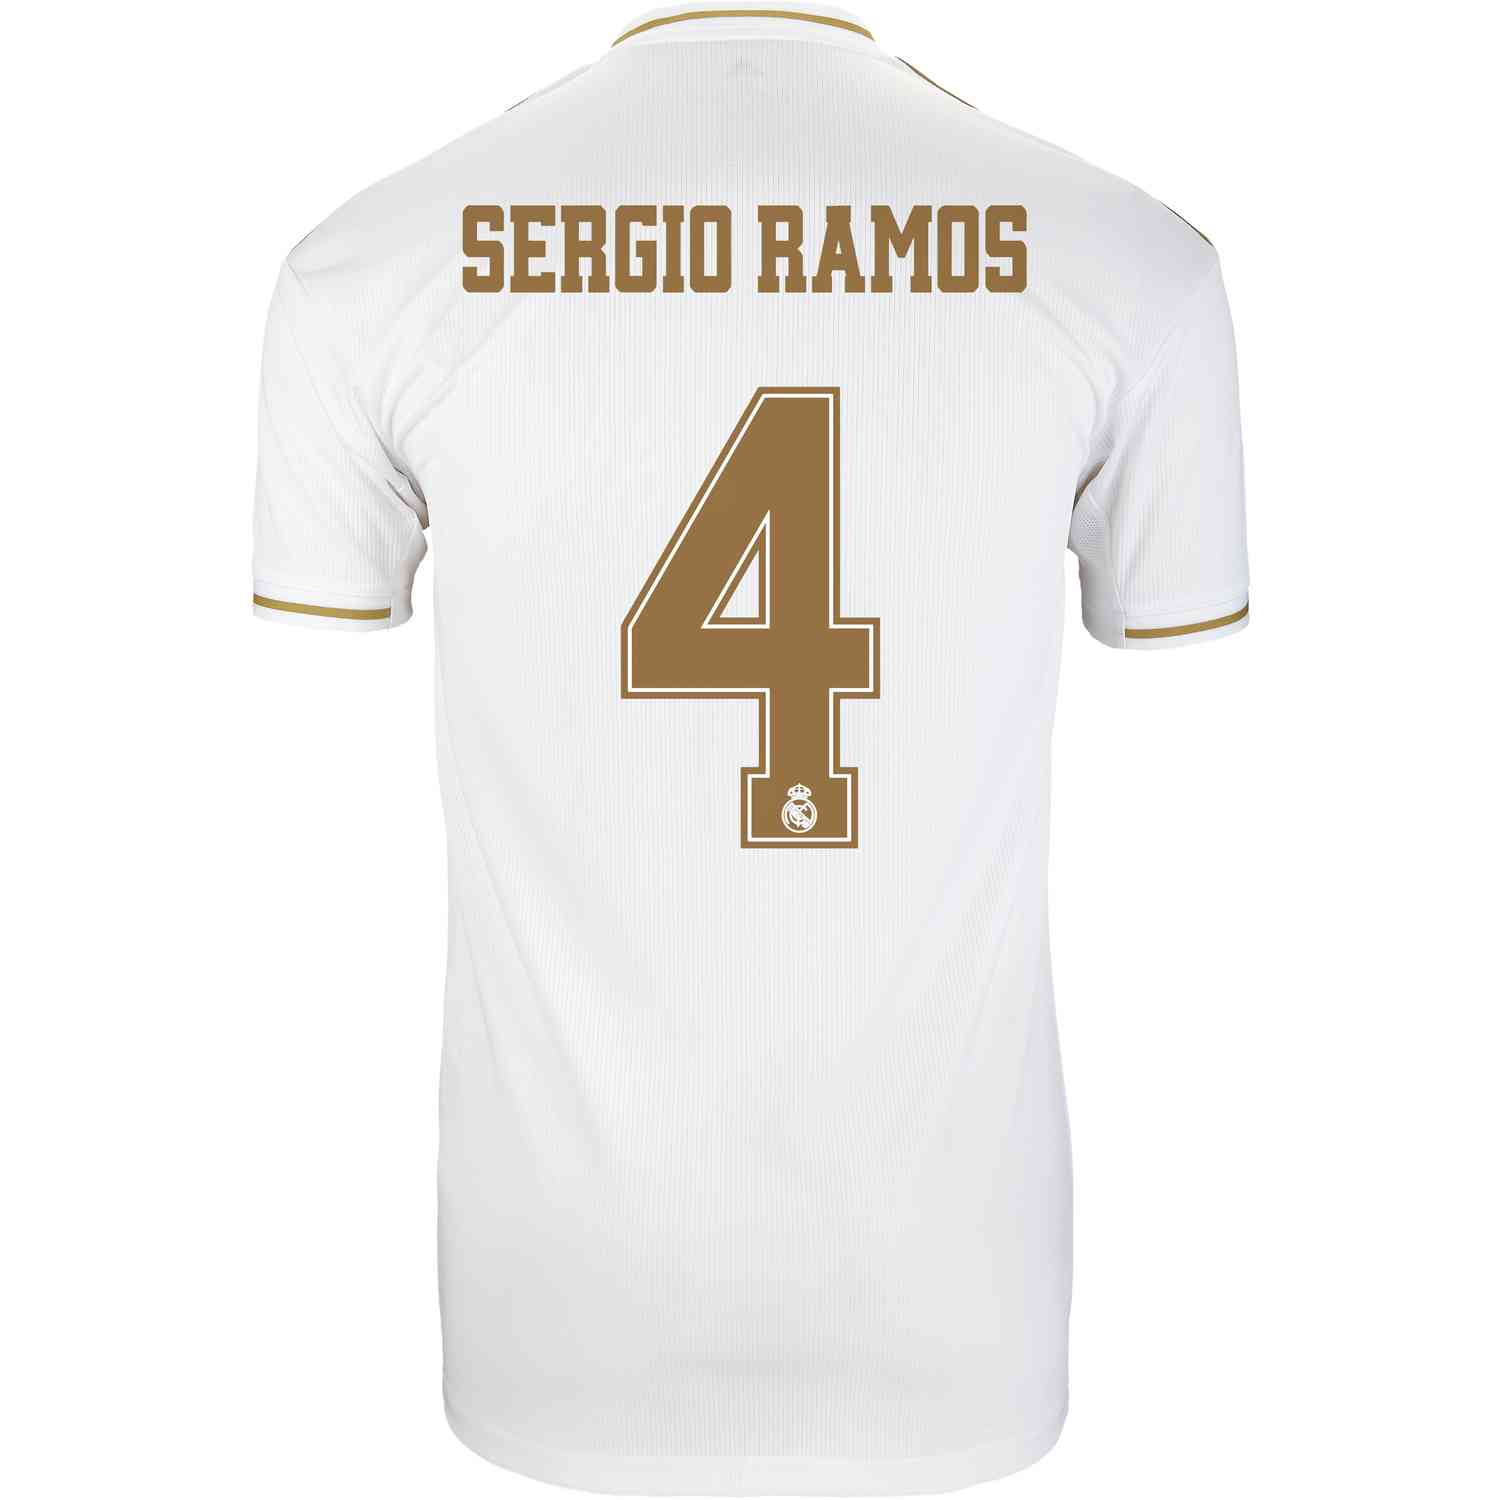 2019/20 adidas Sergio Ramos Real Madrid Home Jersey - SoccerPro